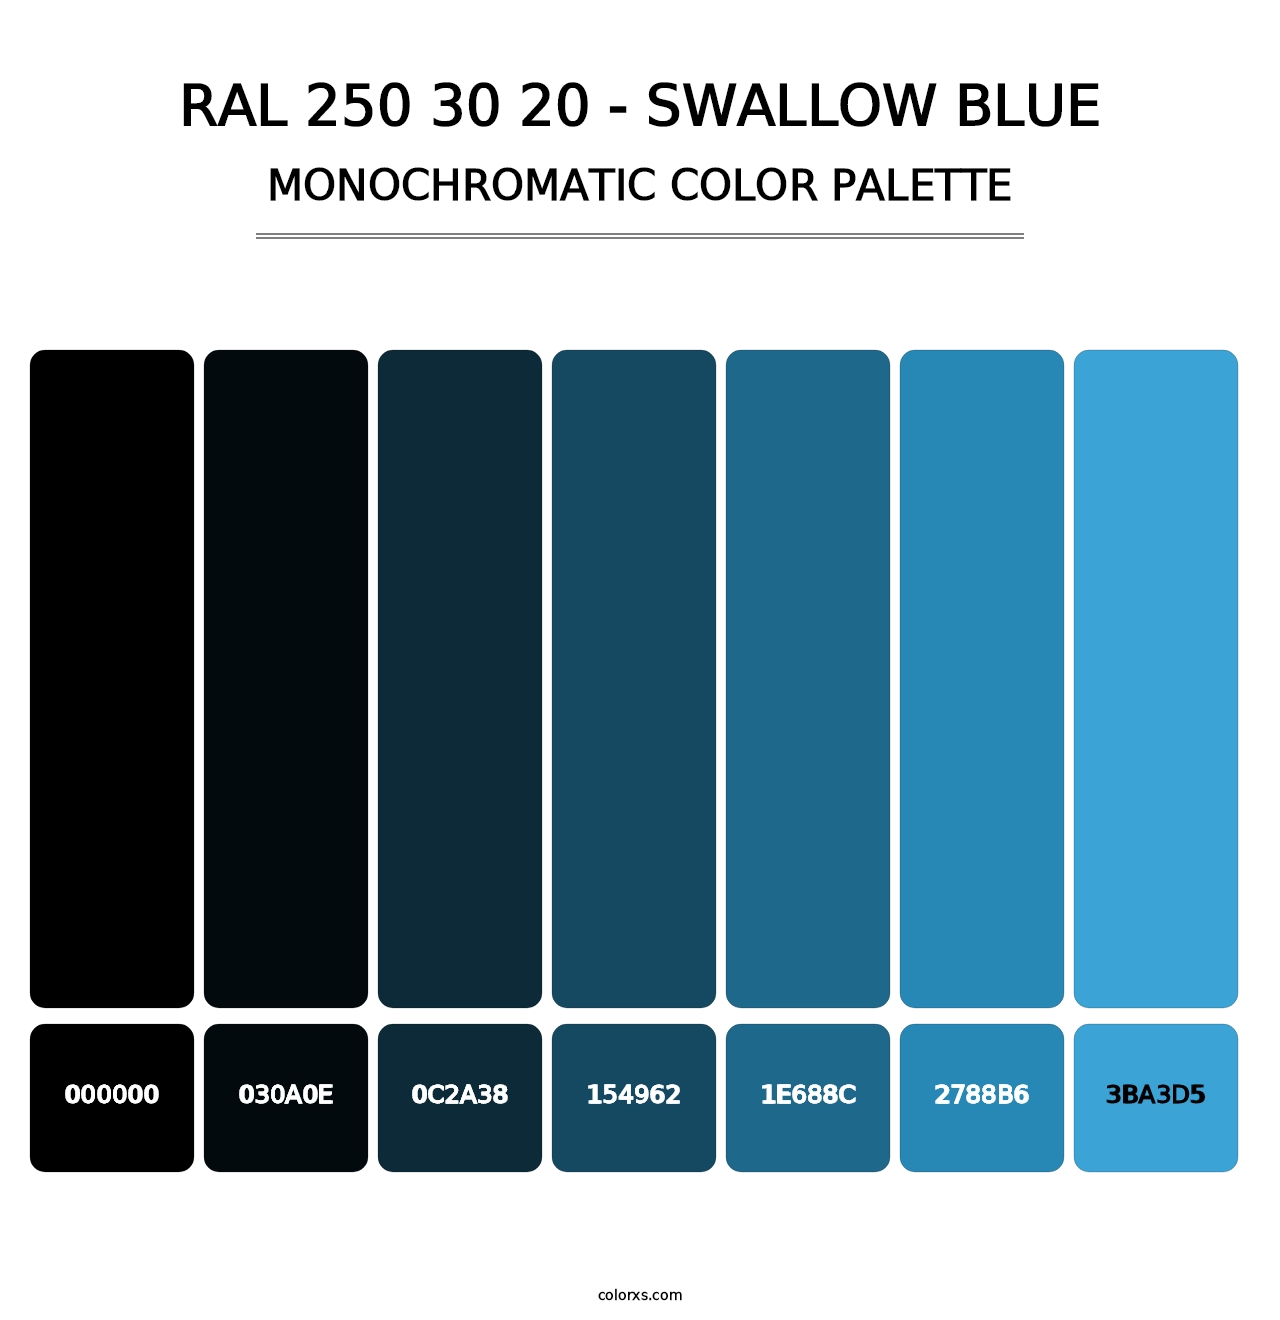 RAL 250 30 20 - Swallow Blue - Monochromatic Color Palette